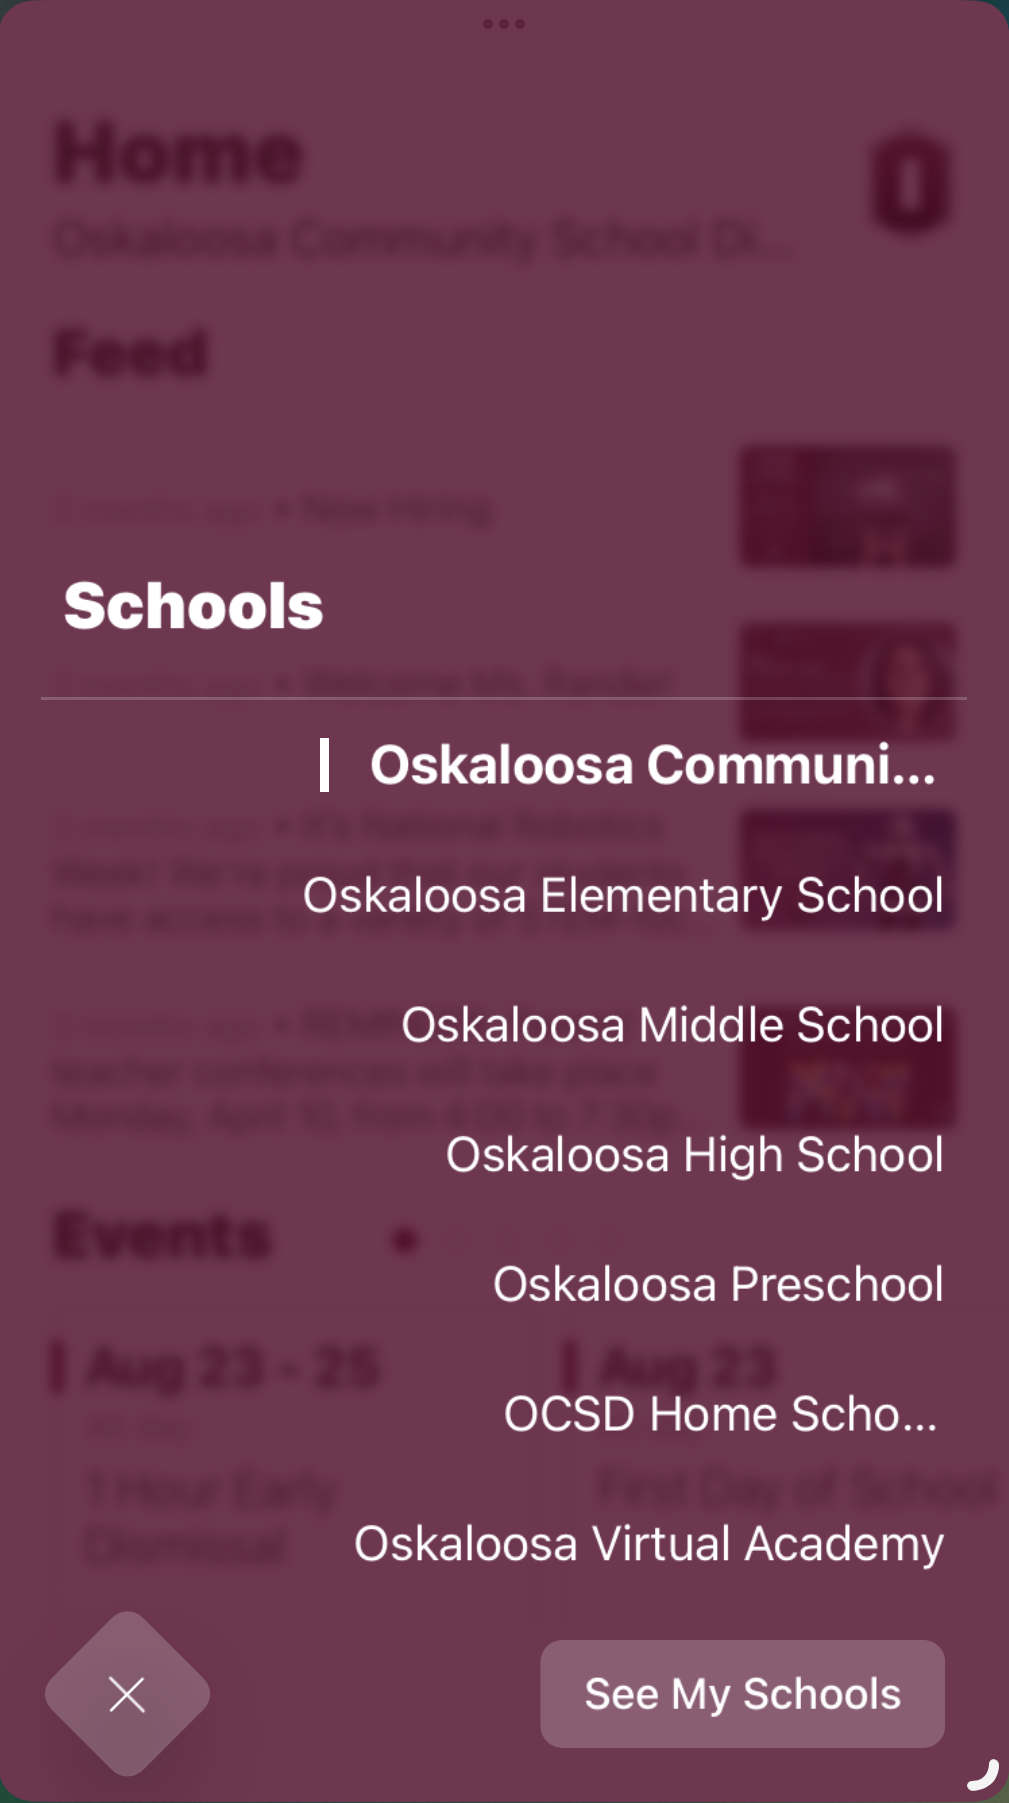 List of all schools in app